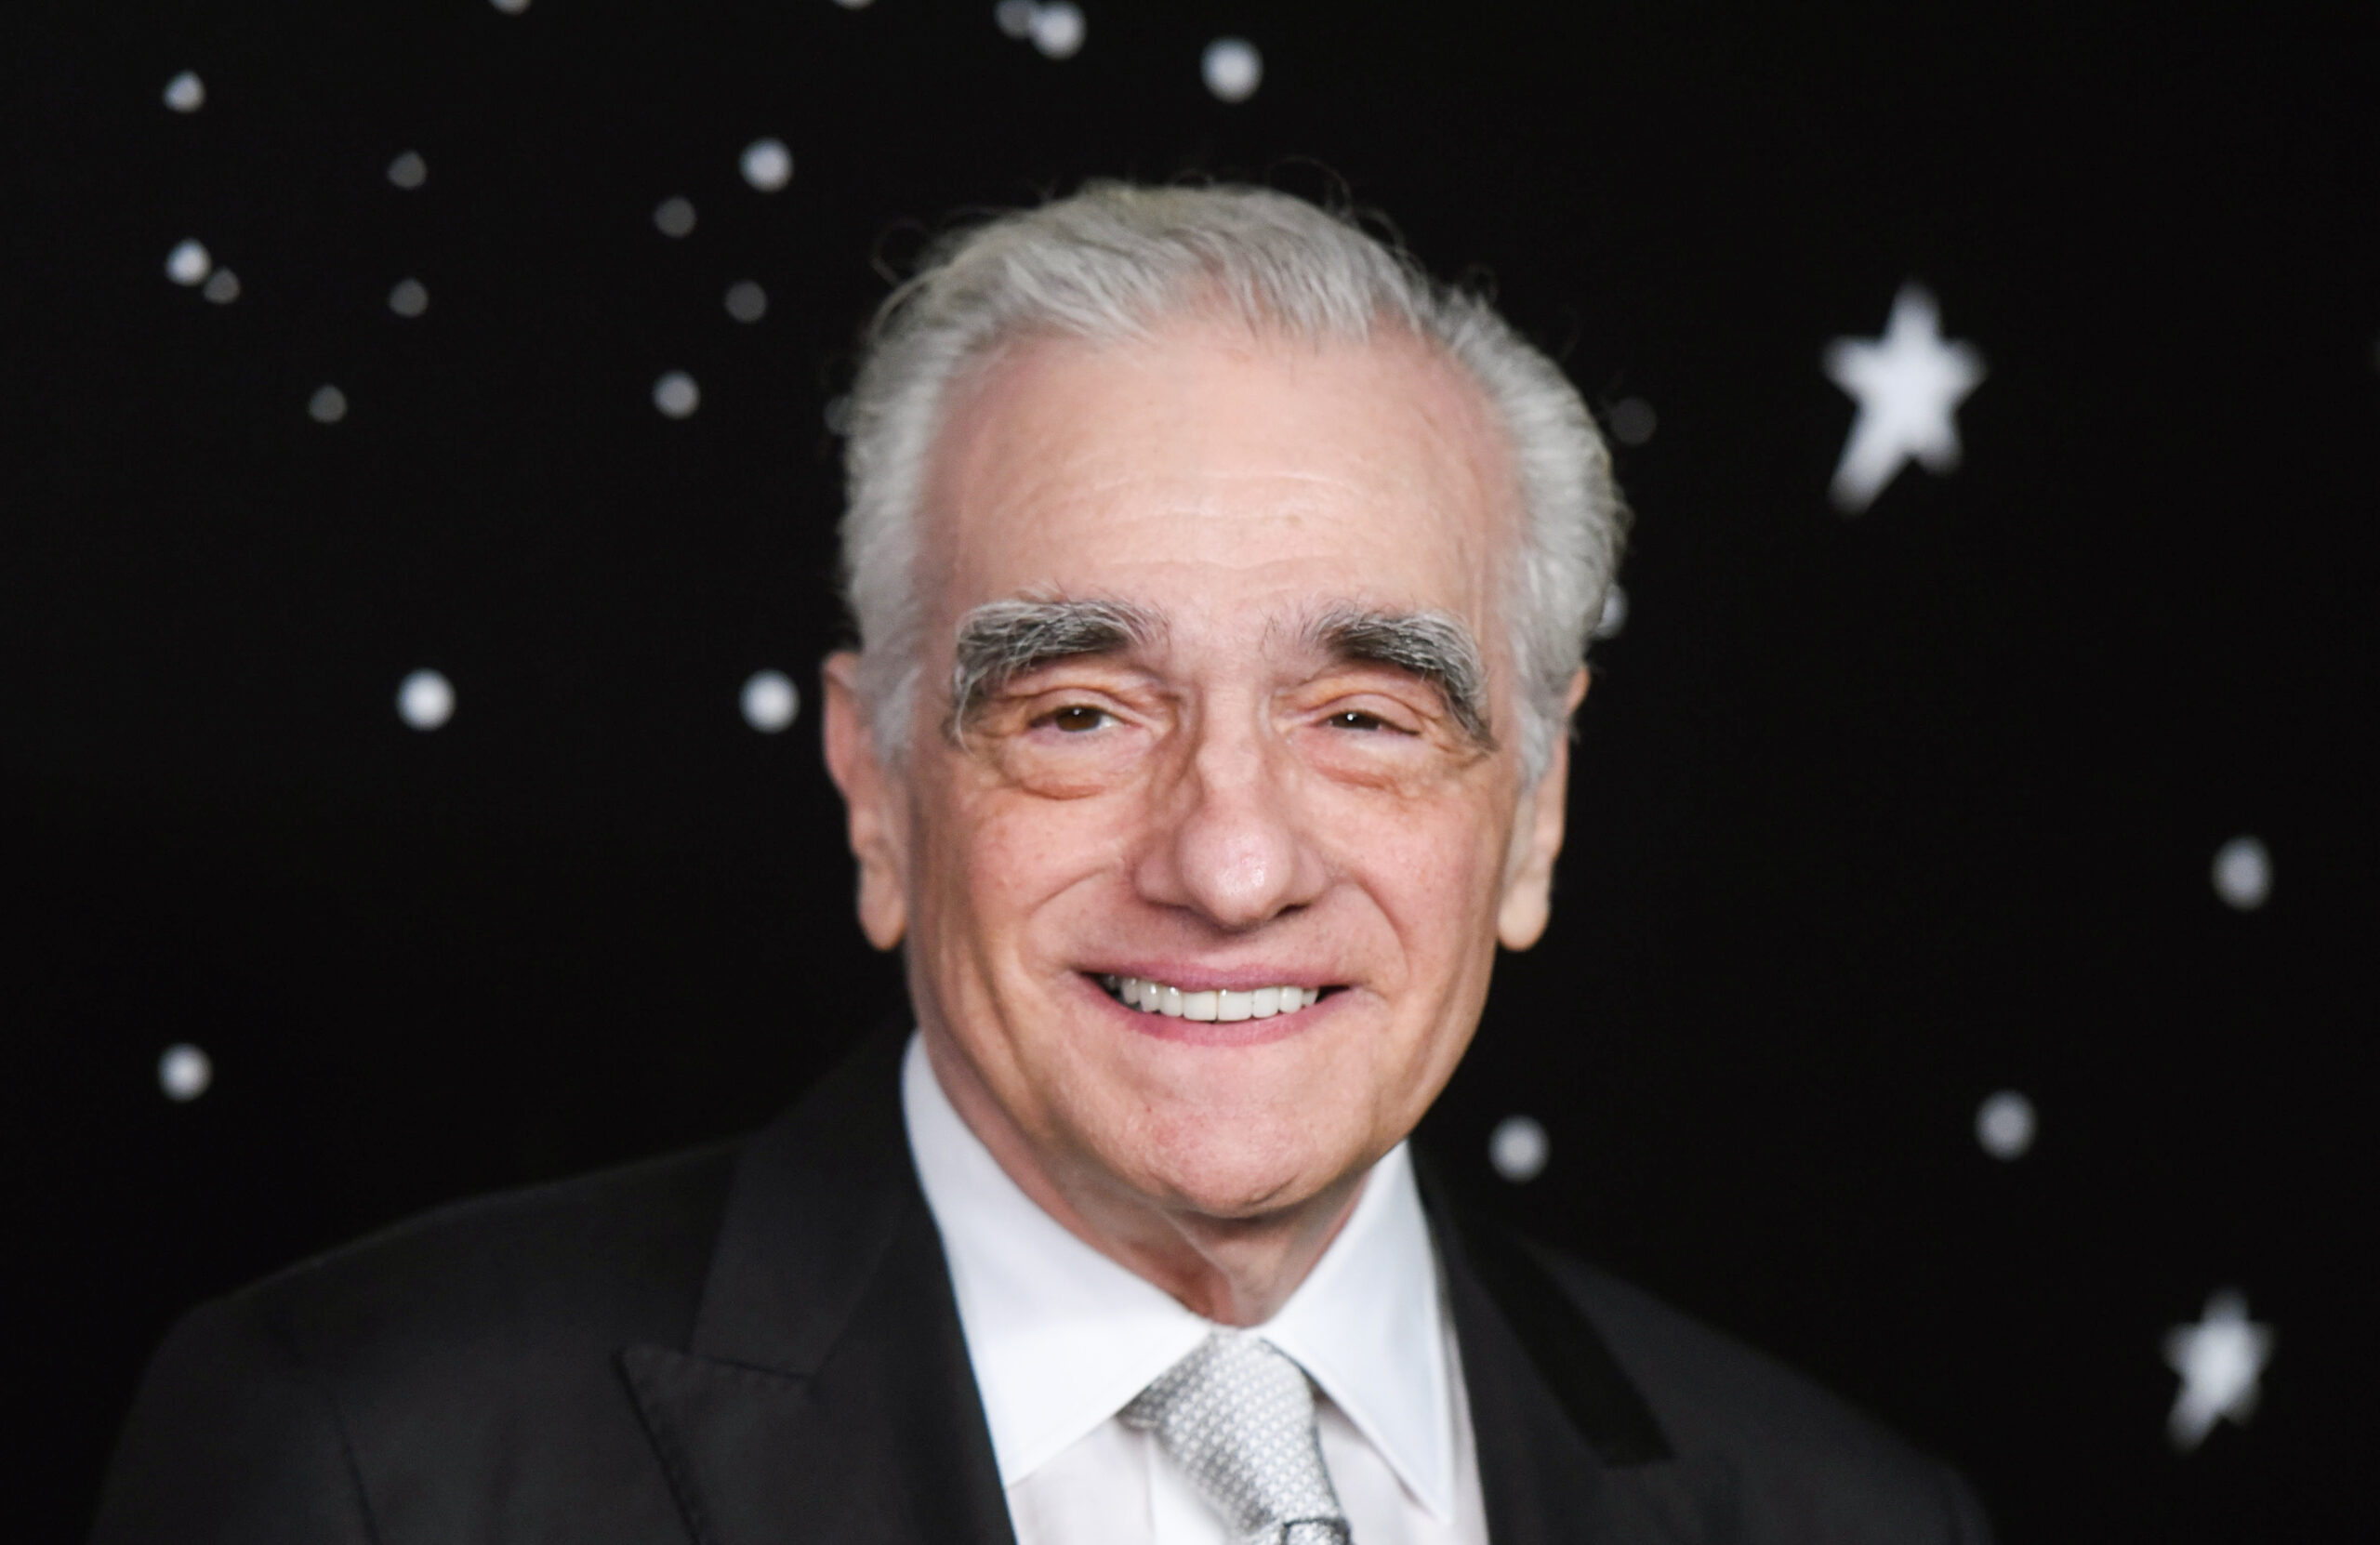 Martin Scorsese is set to produce a docuseries focusing on Christian saints